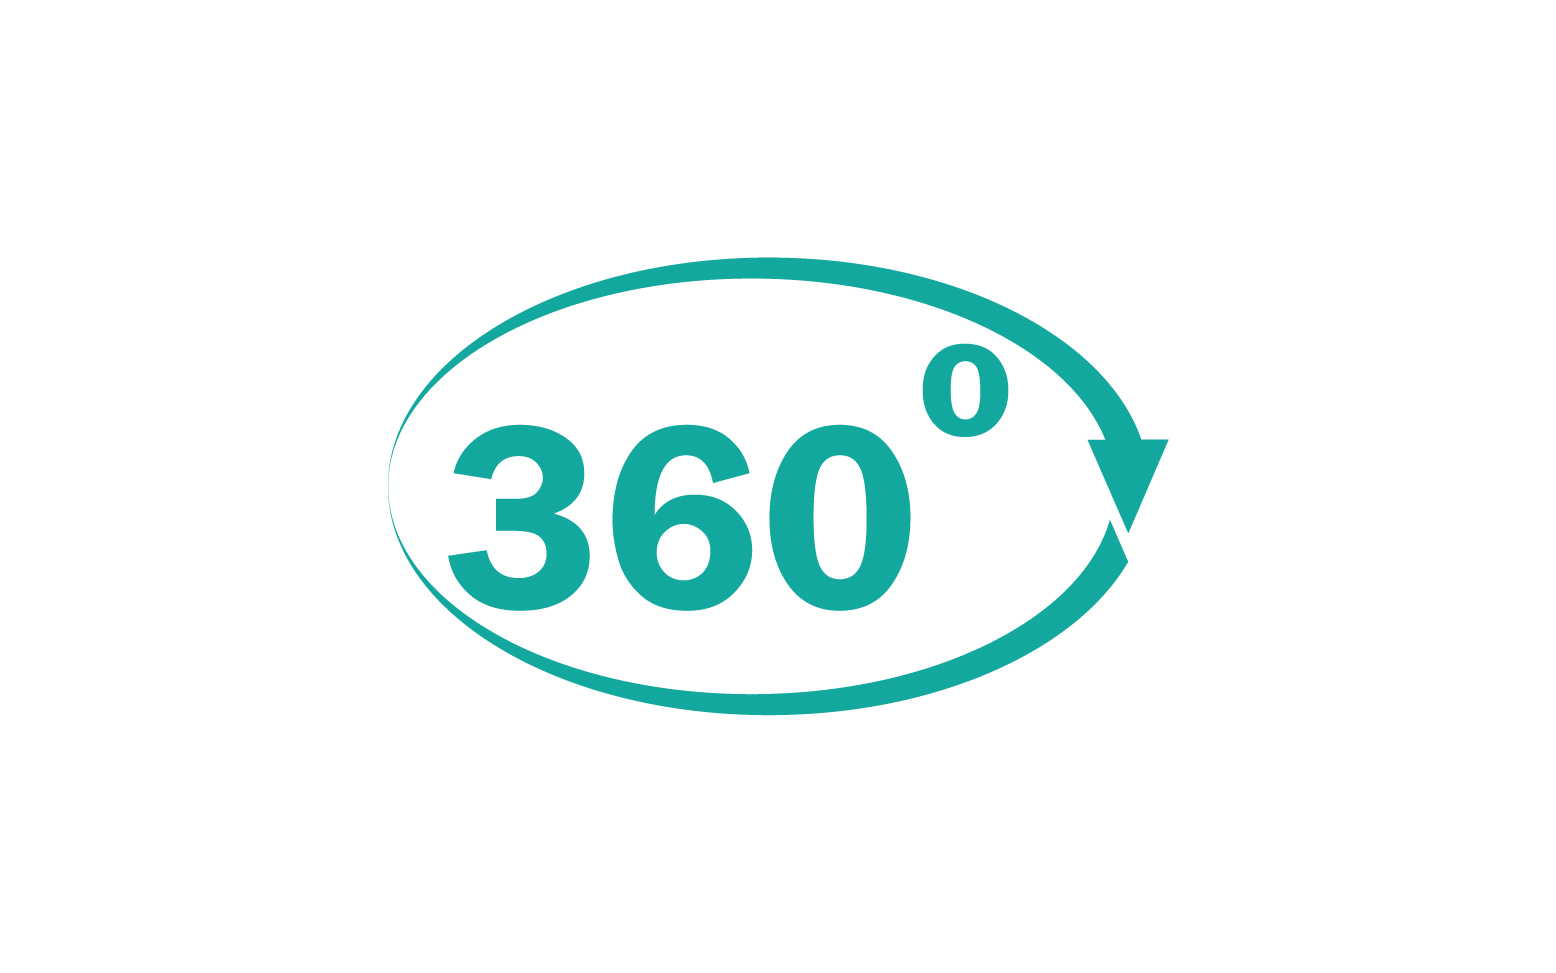 360 degree angle rotation icon symbol logo version v41